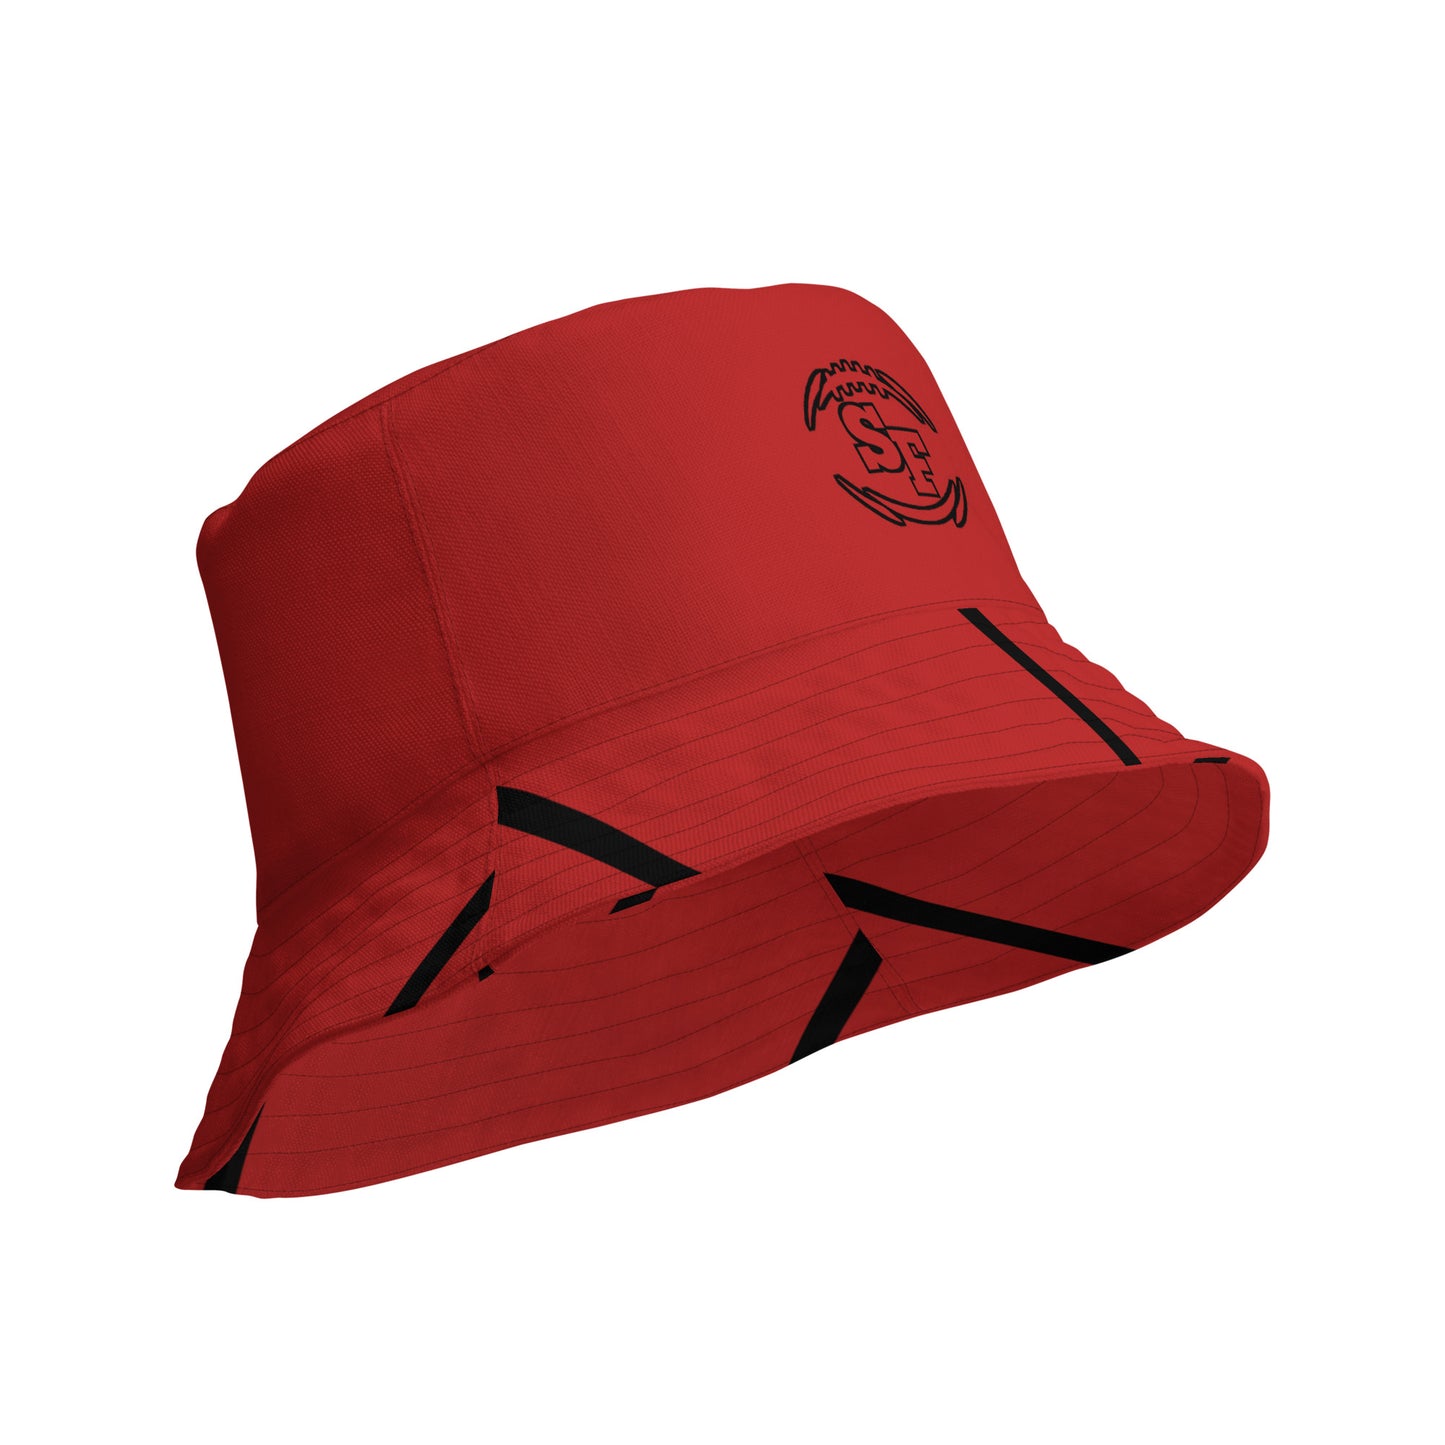 San Francisco Bucket Hat / 49ers hat / Kyle Shanahan Bucket Hat